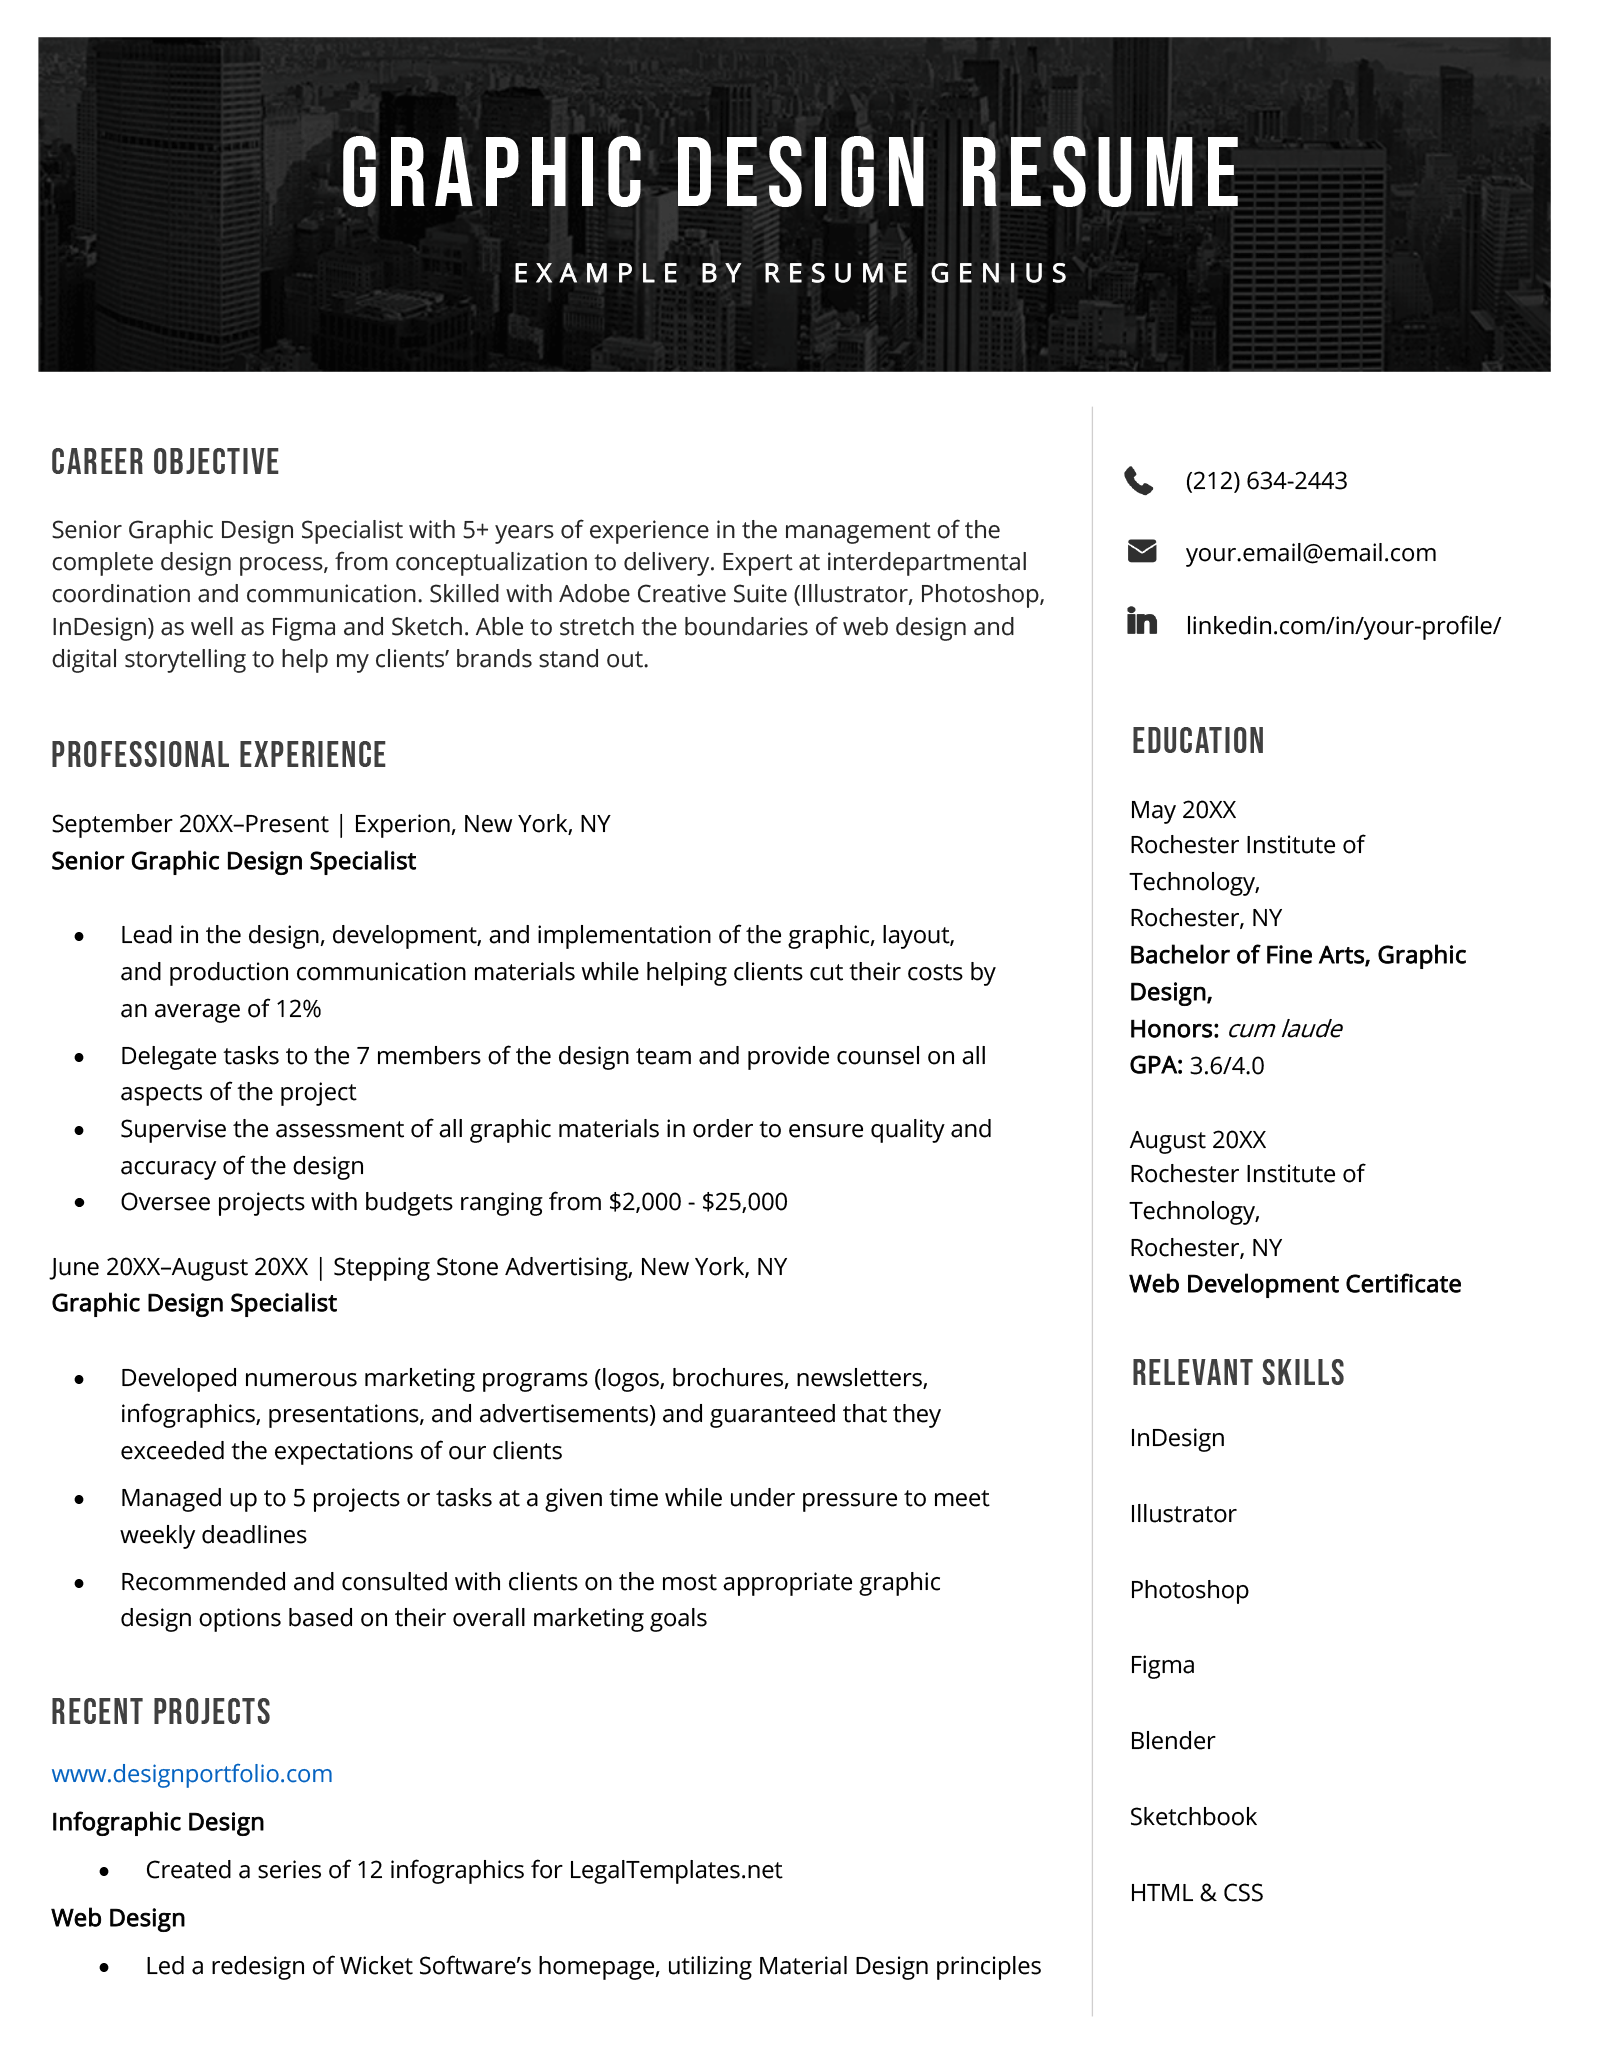 Example of a resume for a graphic designer, using a unique creative design